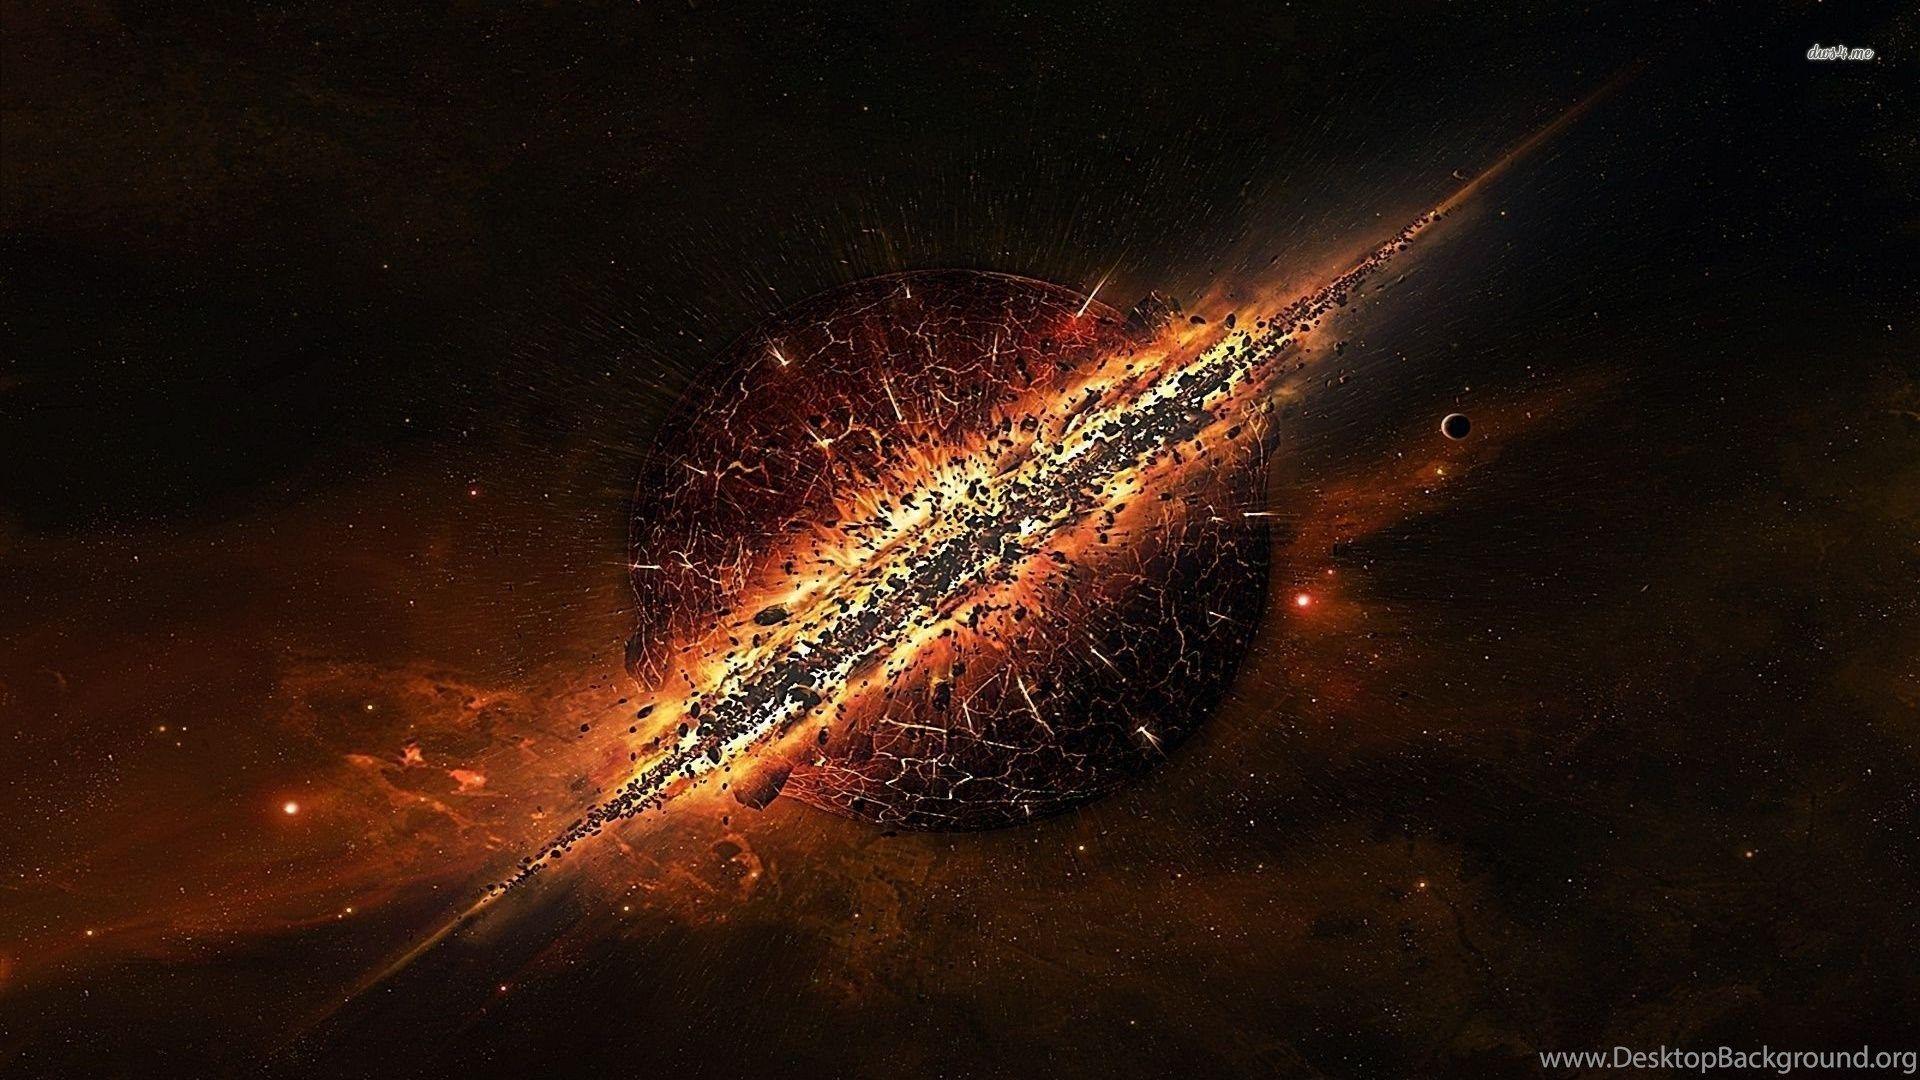 Supernova Explosion Wallpapers Top Free Supernova Explosion